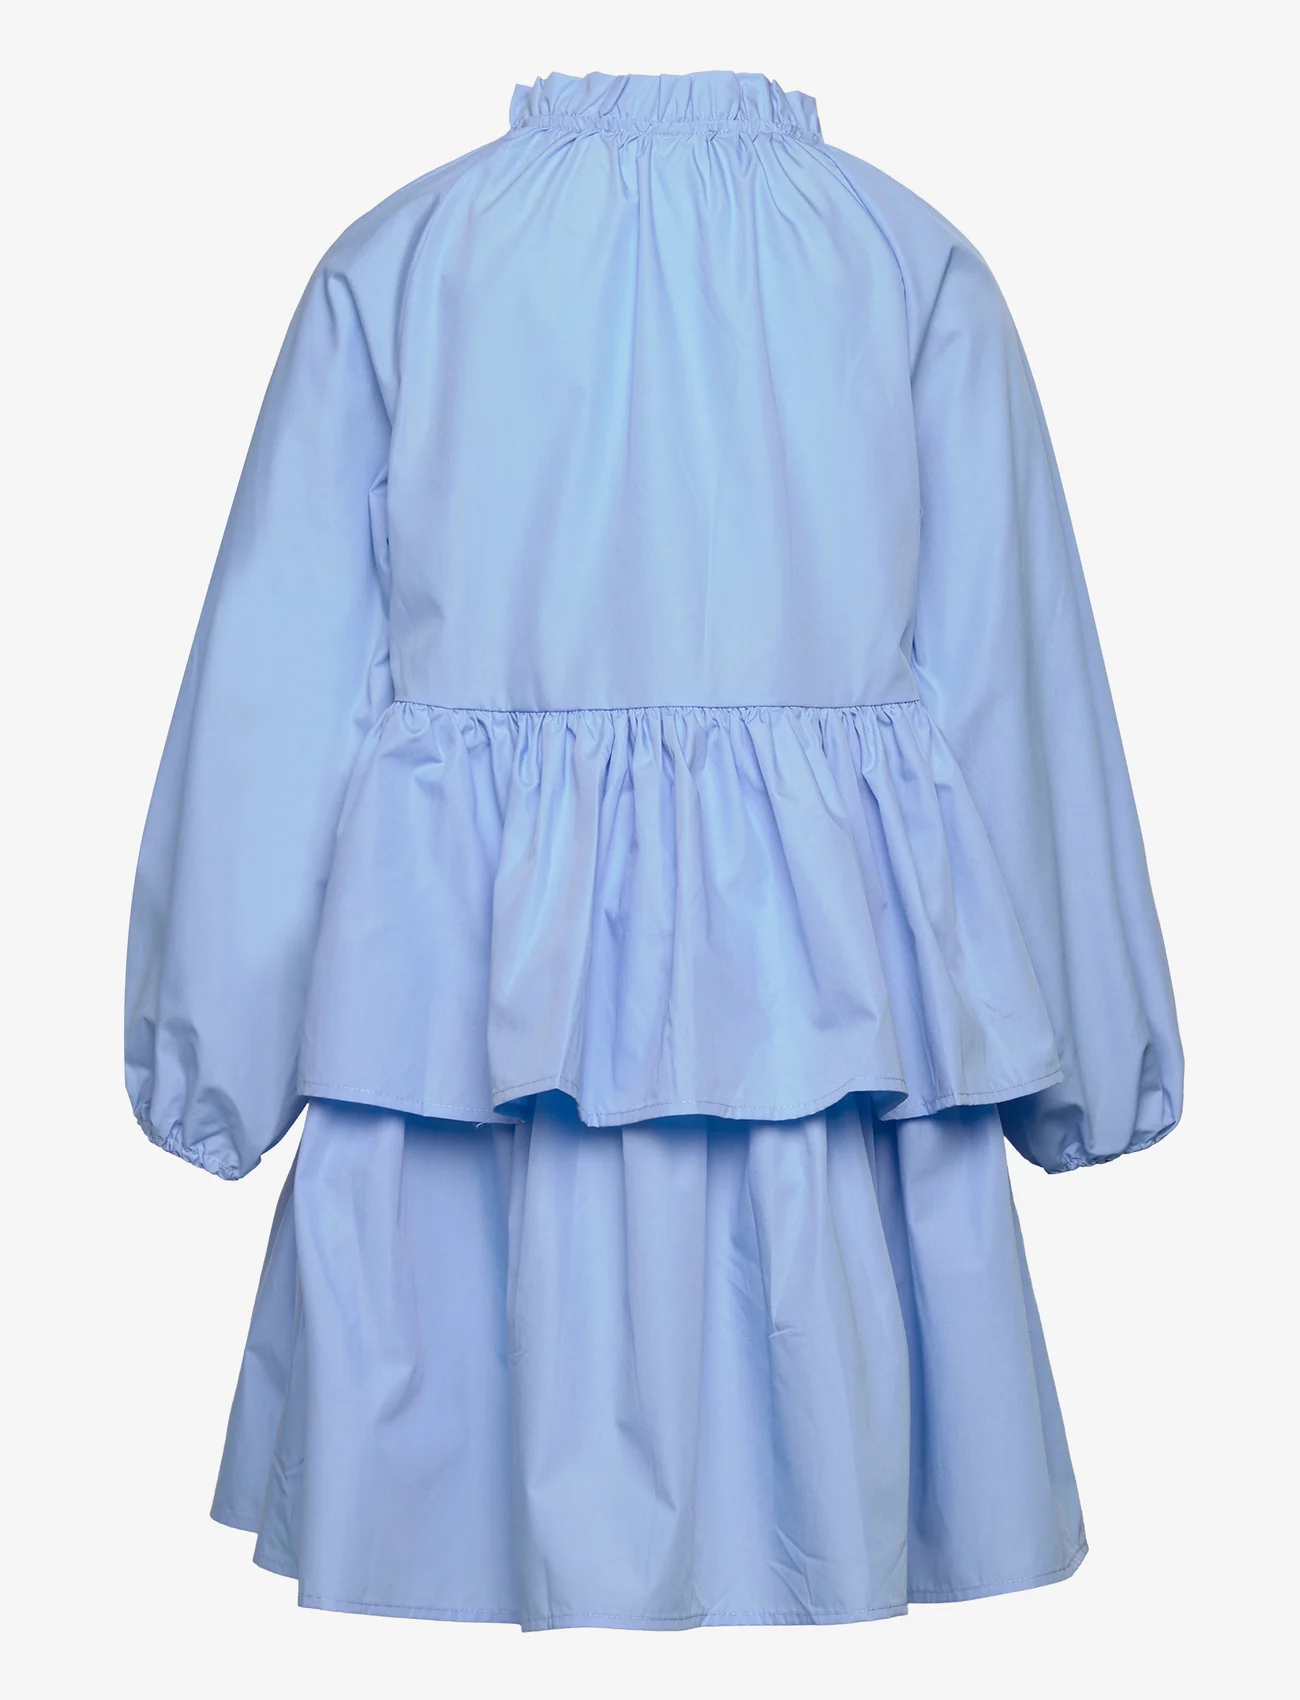 Rosemunde Kids - Dress - sukienki eleganckie - heaven - 1